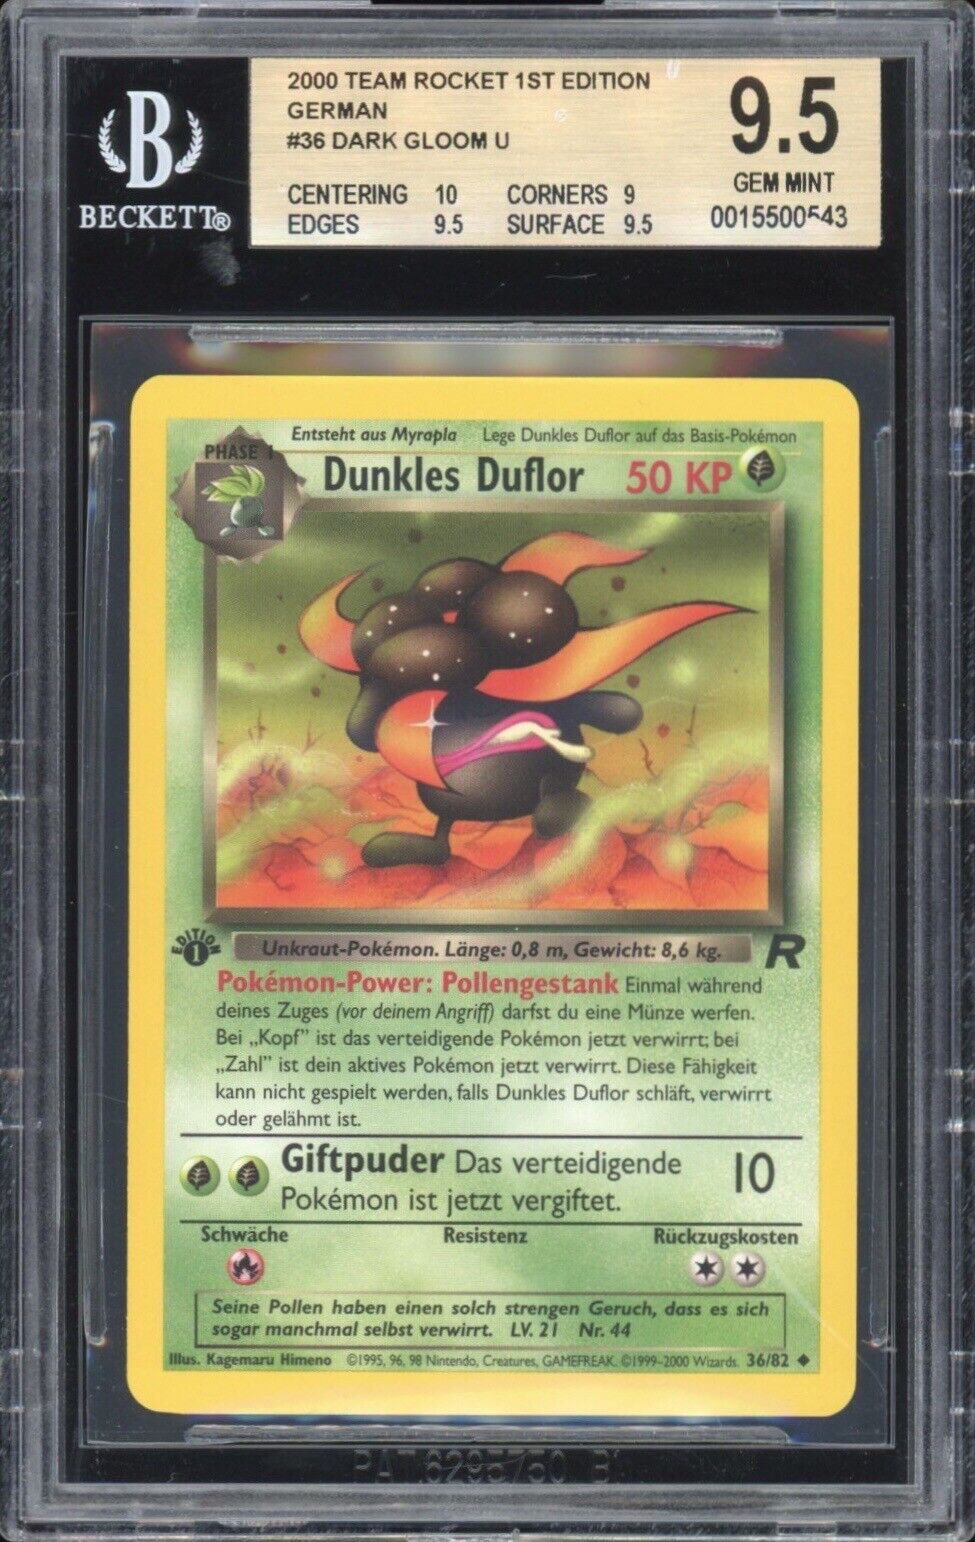 2000 Pokemon GERMAN 1st Edition Rocket Dark Duflor-Dark Gloom 36/82 BGS 9.5